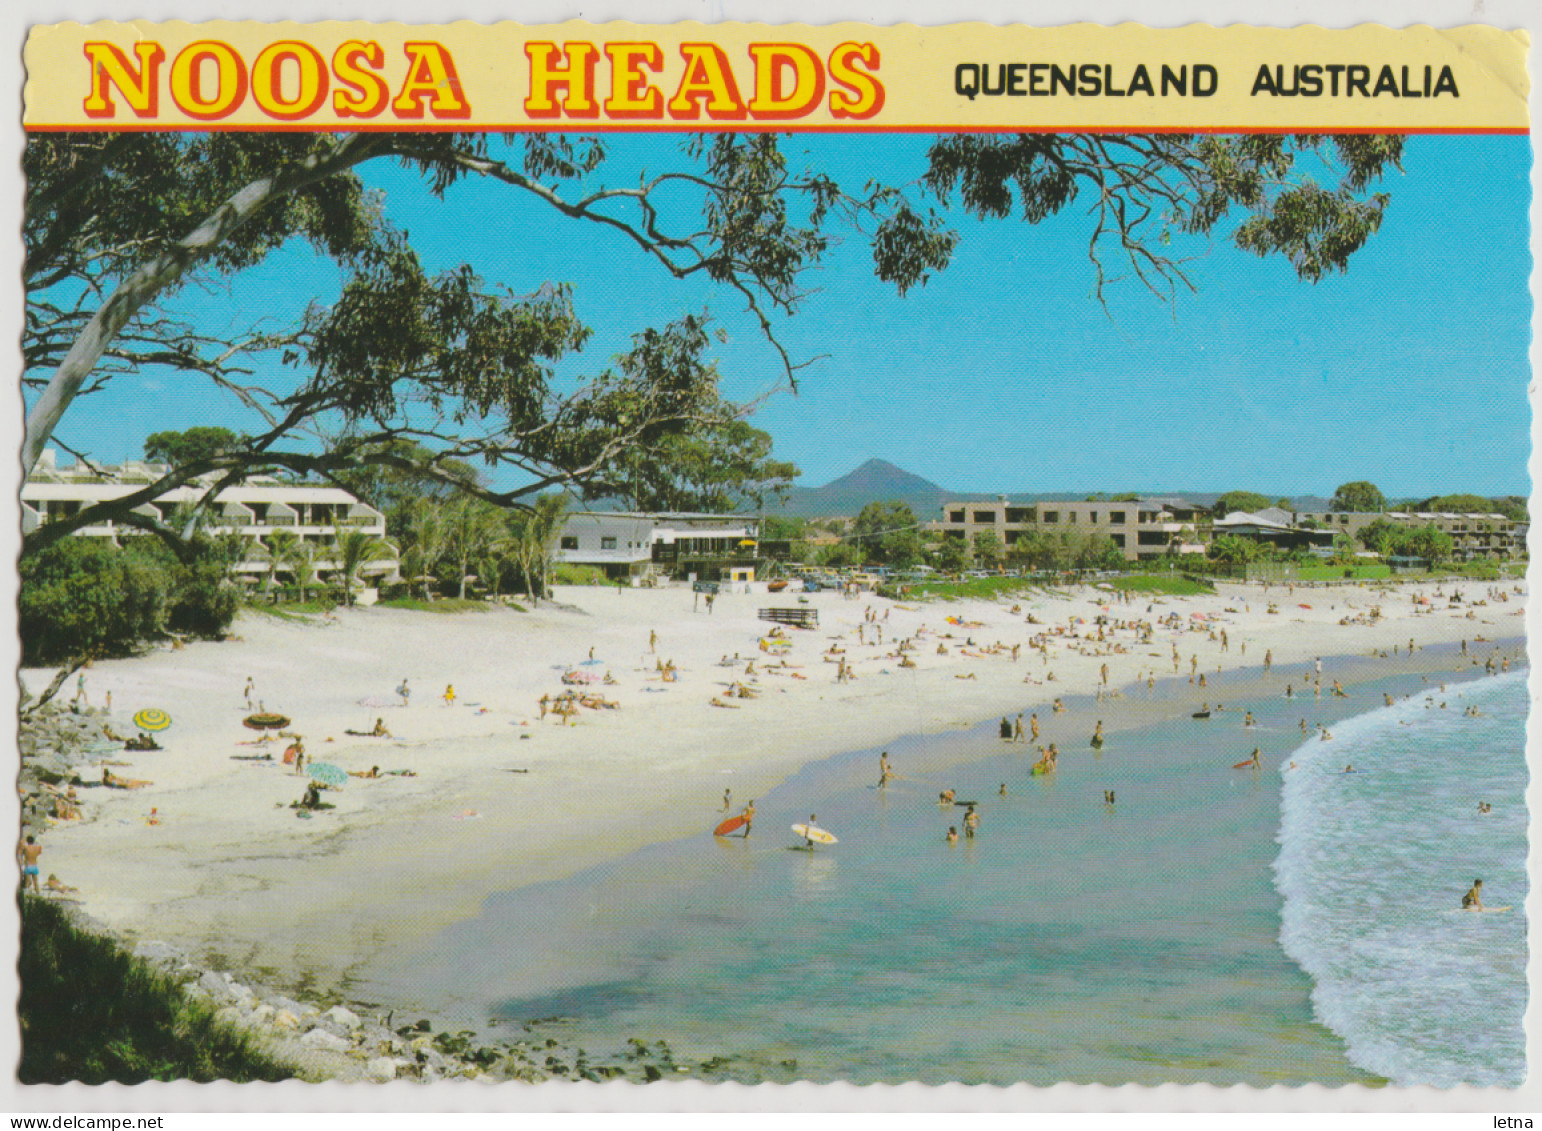 Australia QUEENSLAND QLD Surfing Beach NOOSA HEADS Sunshine Coast Kuskopf 250 Postcard C1970s - Sunshine Coast